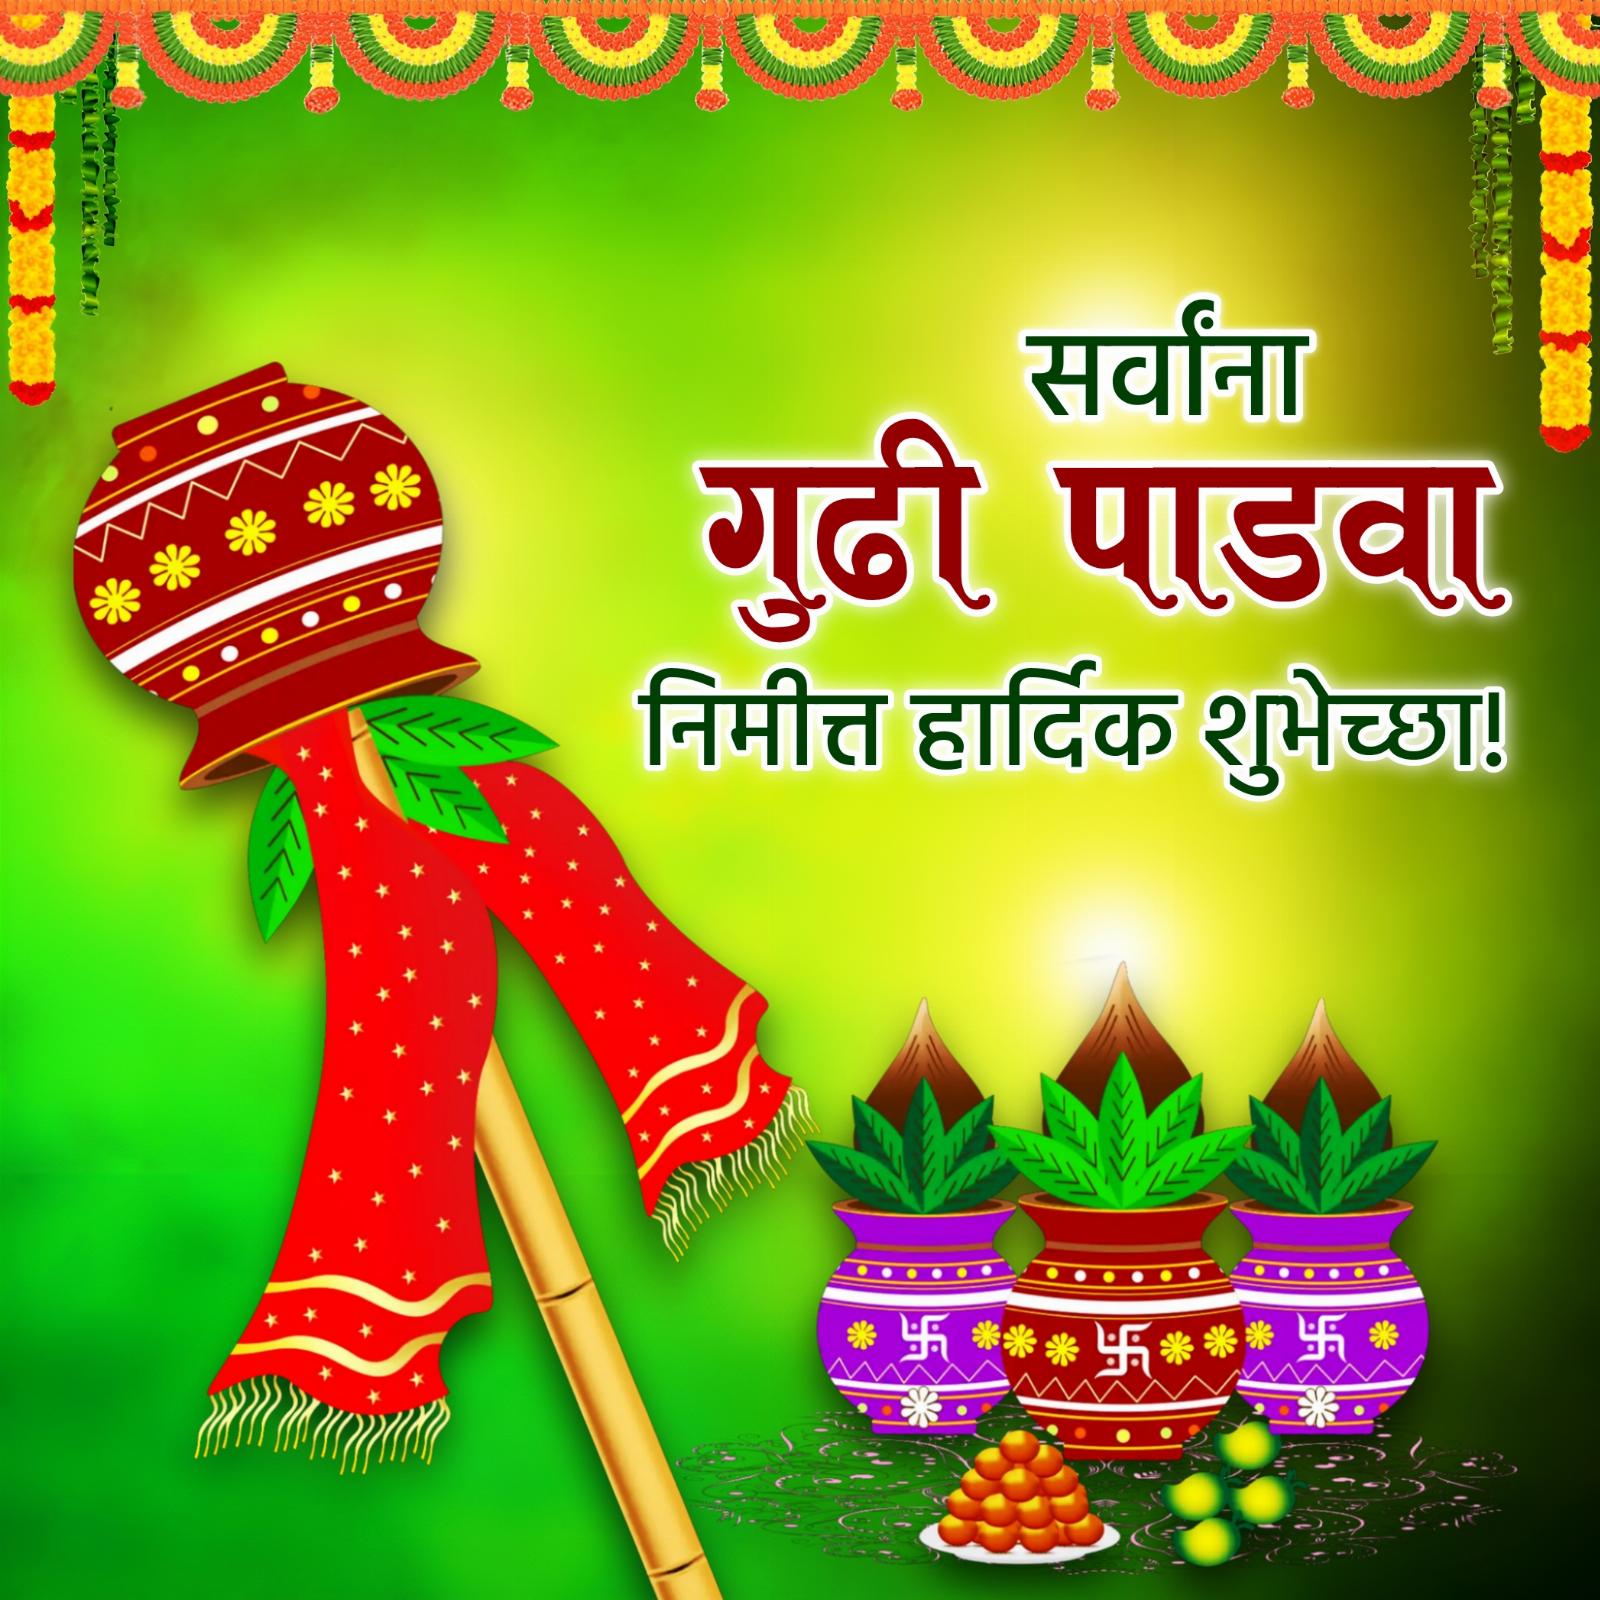 Happy Gudi Padwa Images in Marathi